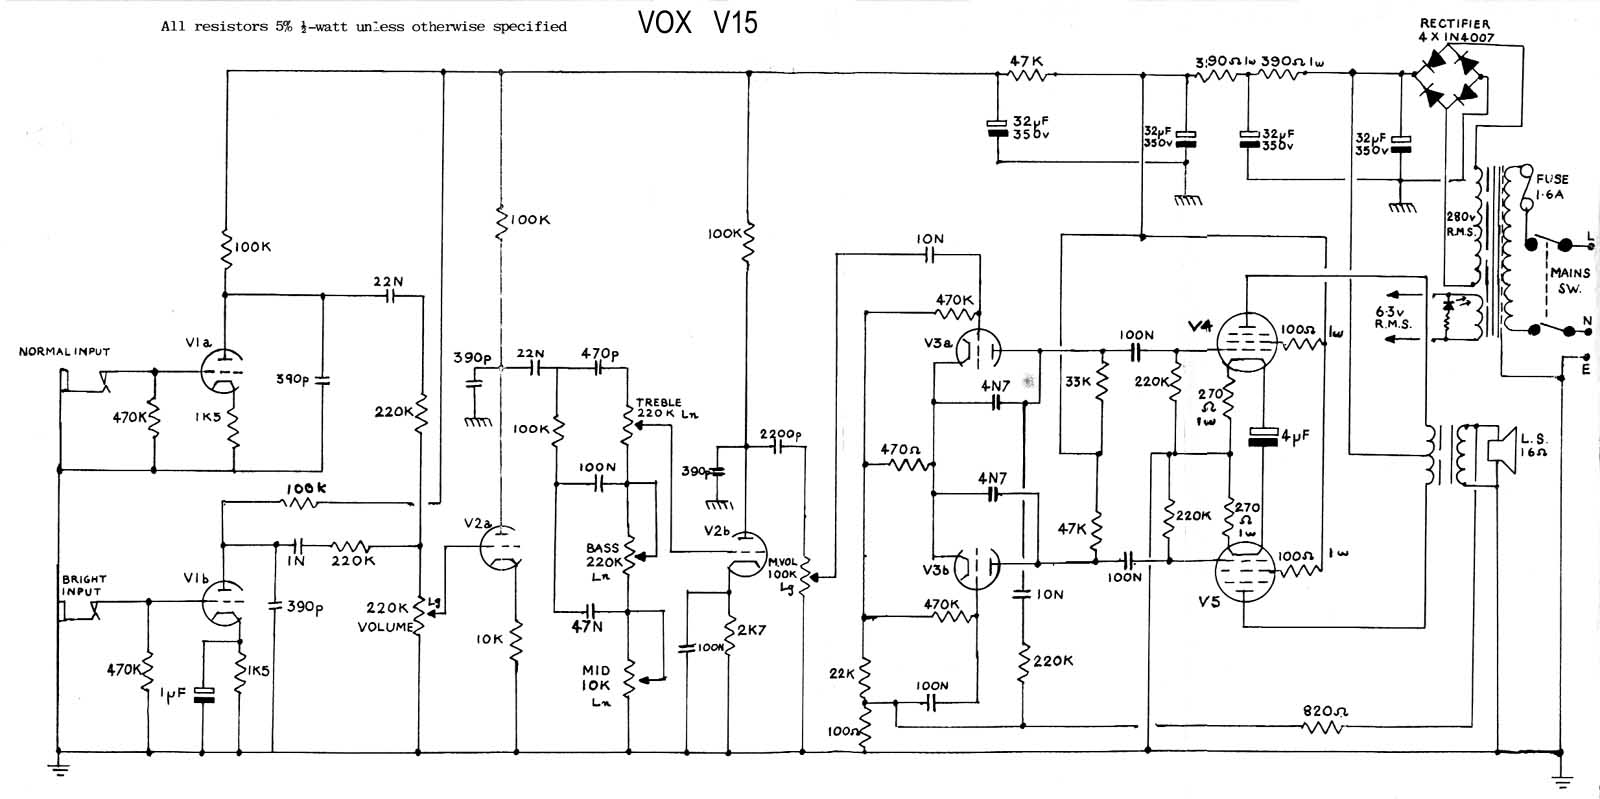 Vox v15 schematic